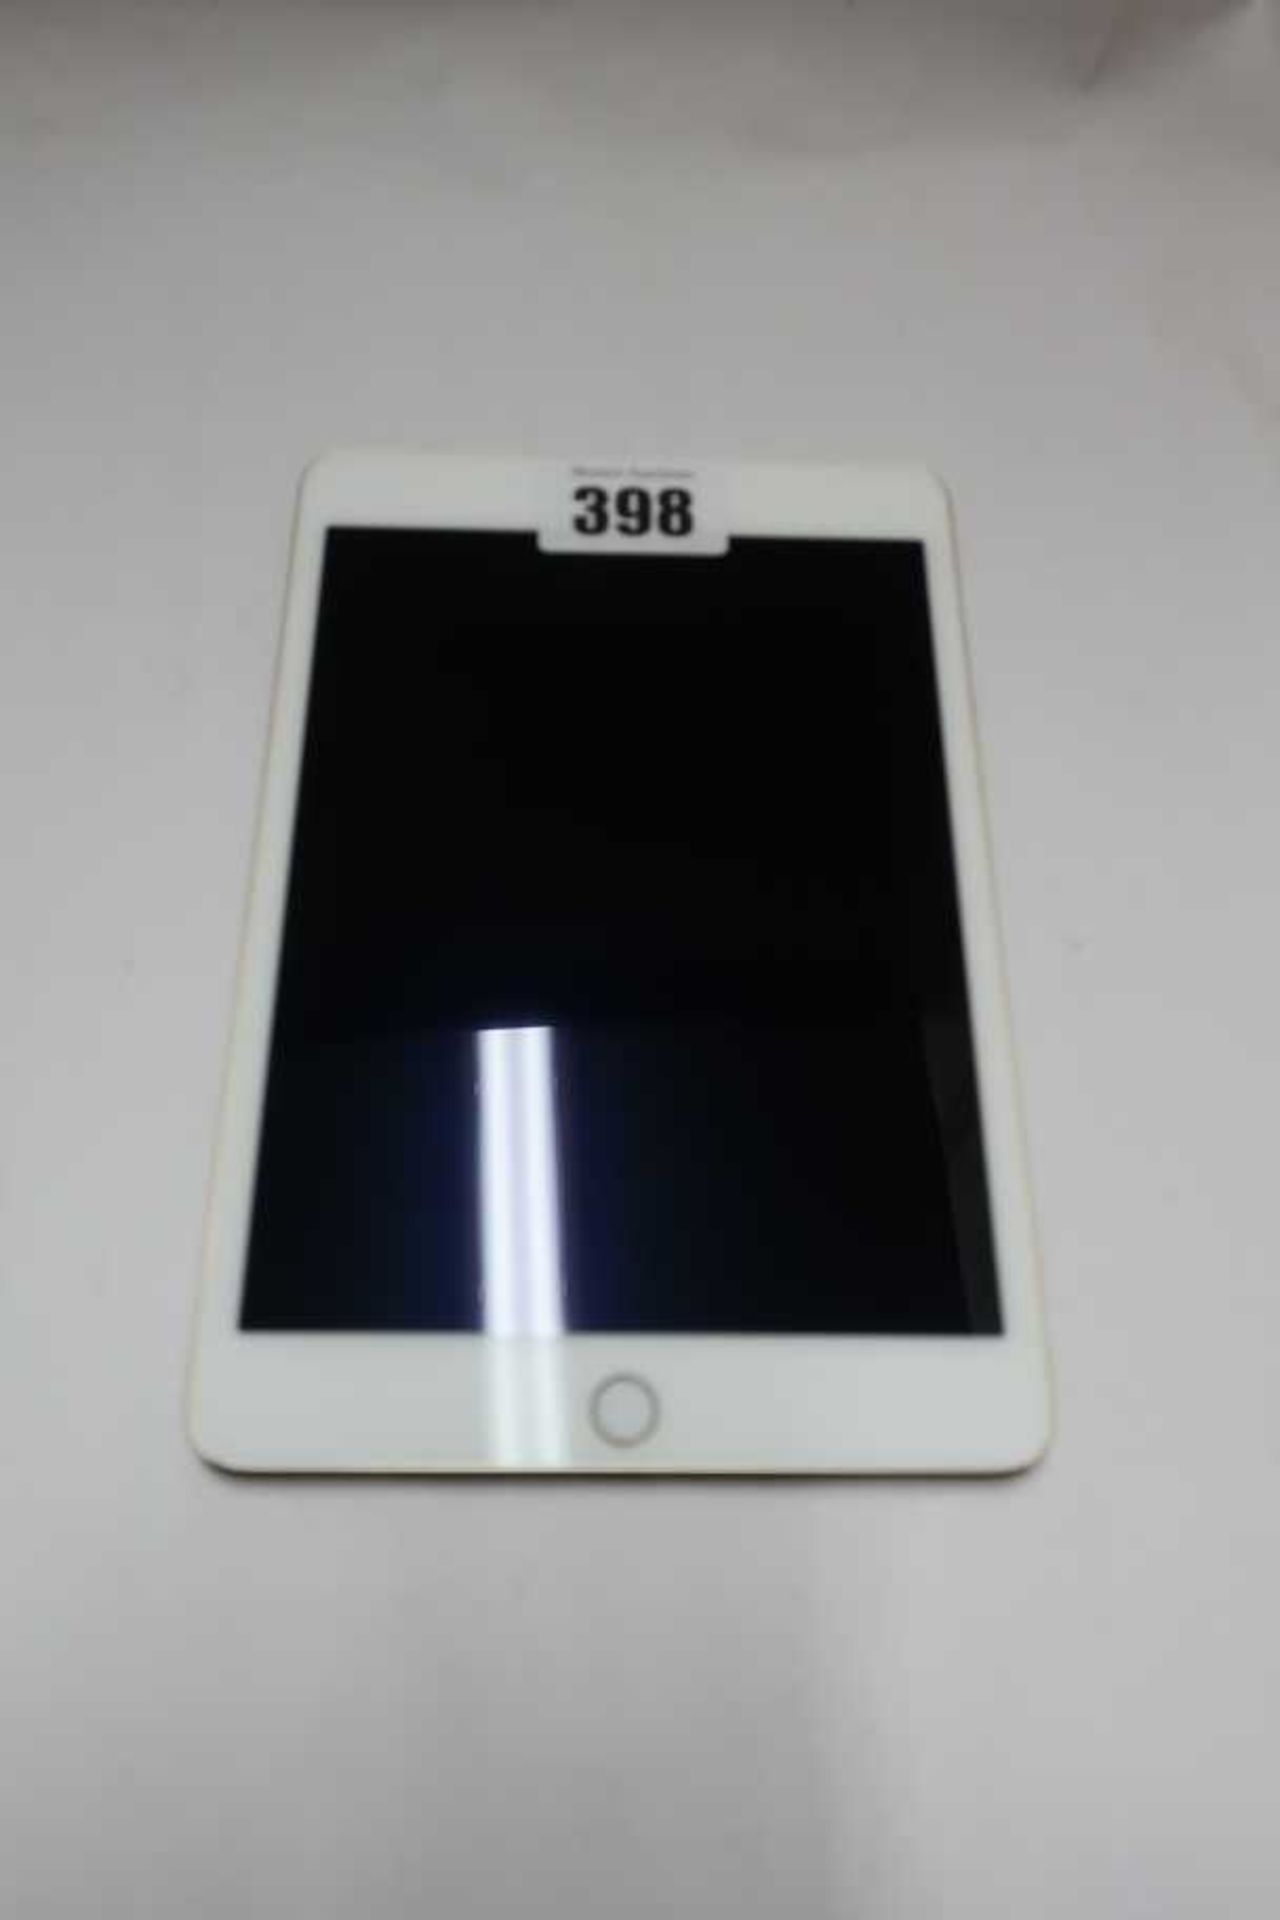 A pre-owned Apple iPad mini 4 (Wi-Fi/Cellular) A1550 64GB in Silver (IMEI: 359275062343897) (